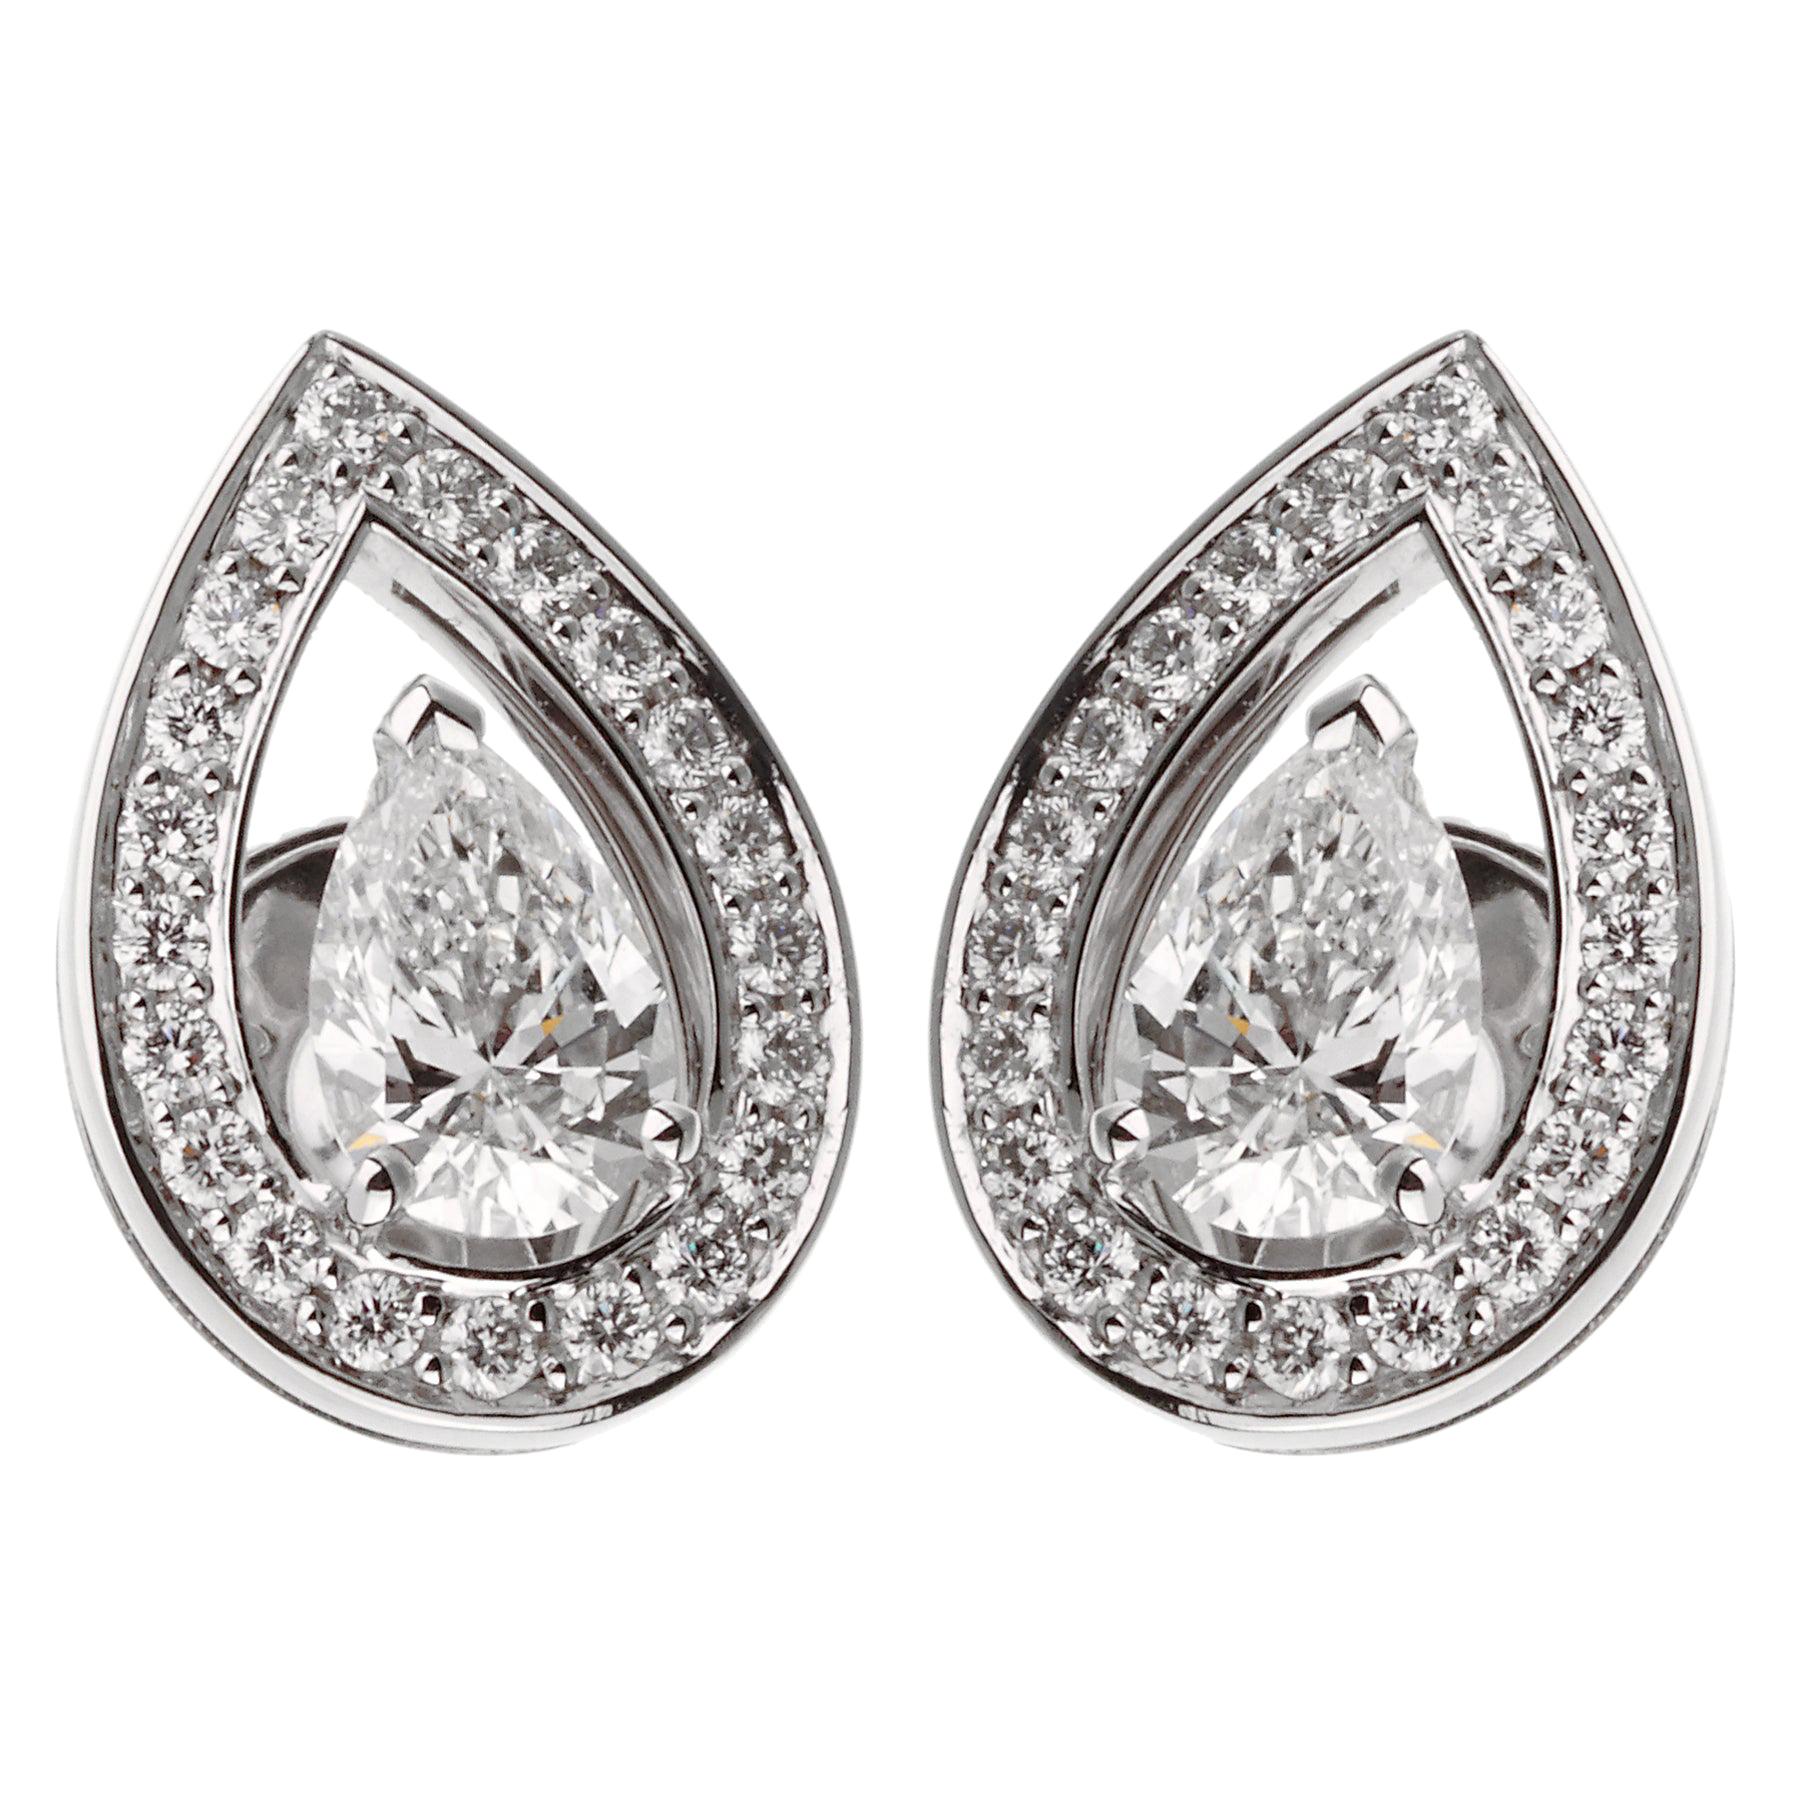 Fred of Paris Lovelight Pear Shaped Diamond Stud Earrings